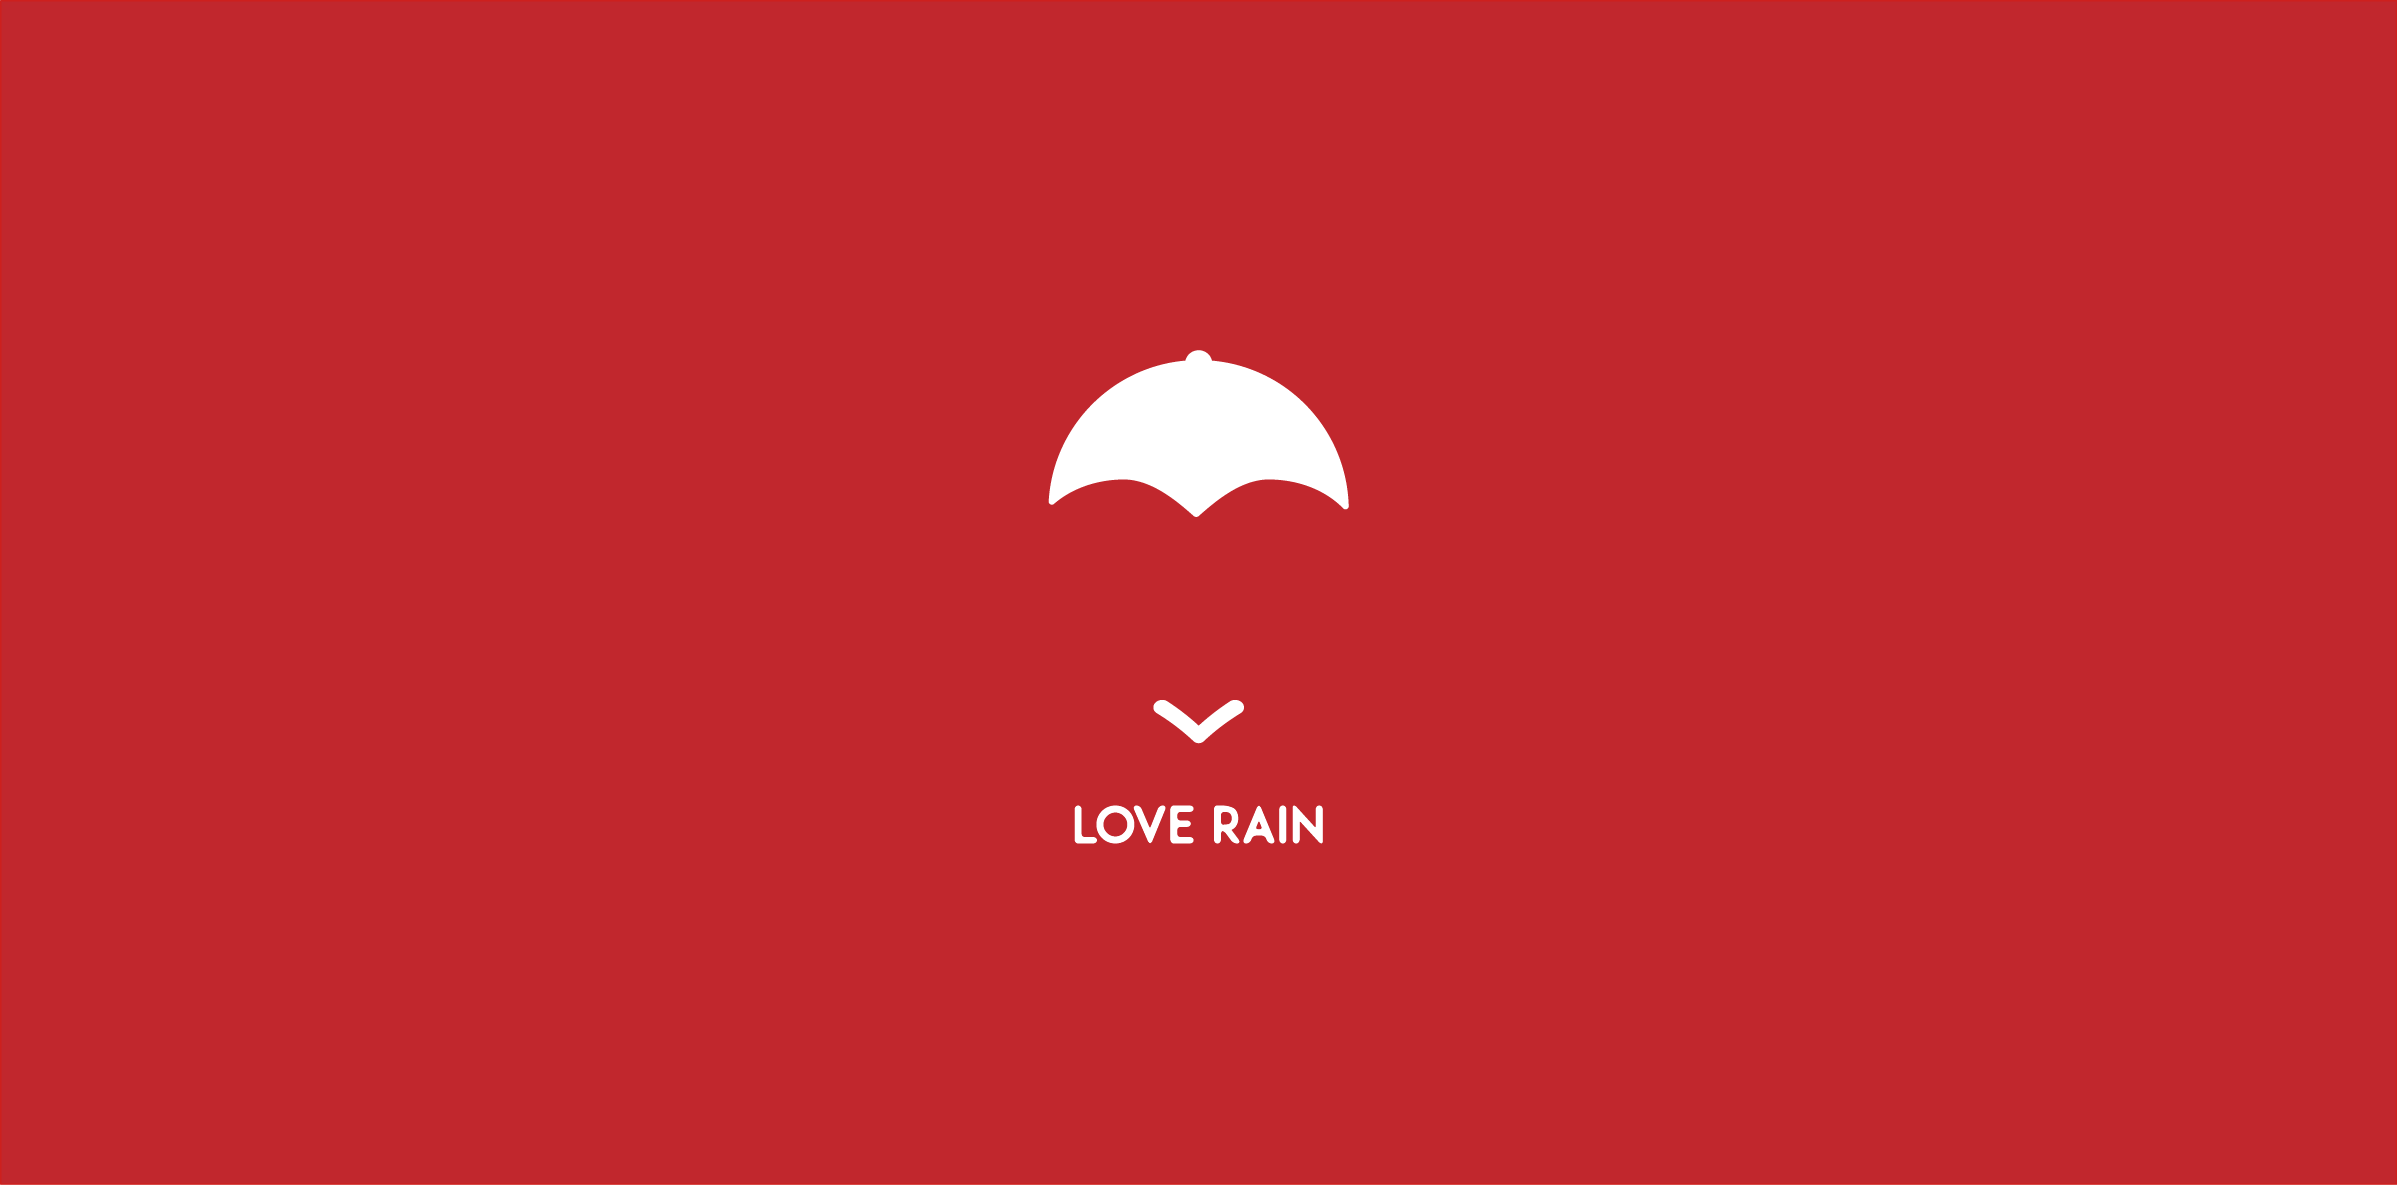 Rainy Logo - RAIN LOVER | LogoMoose - Logo Inspiration